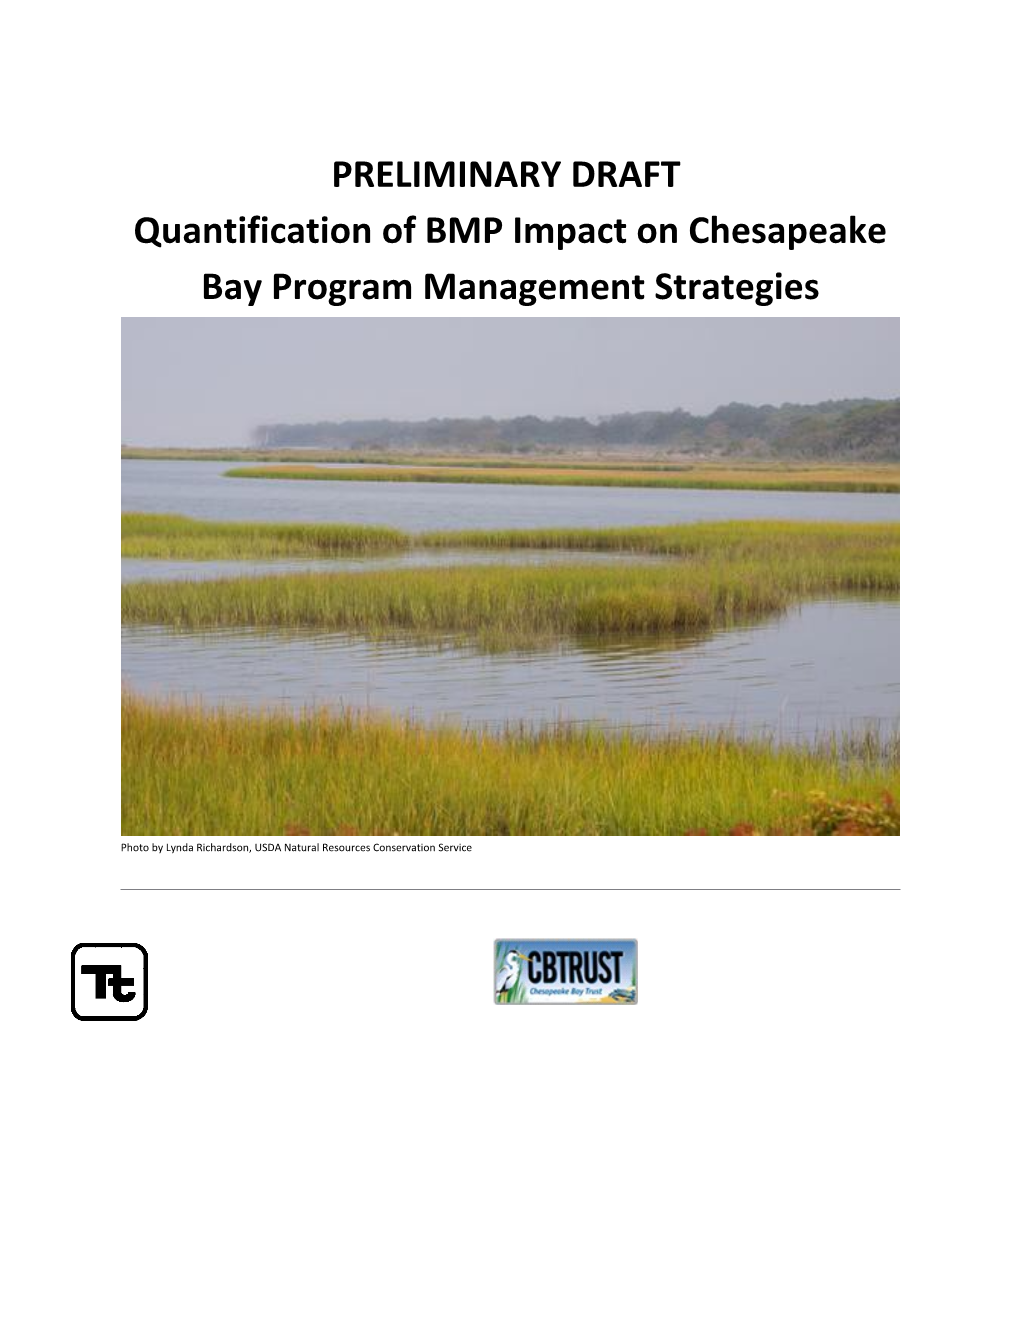 Quantification of BMP Impact on Chesapeake Bay Program Management Strategies